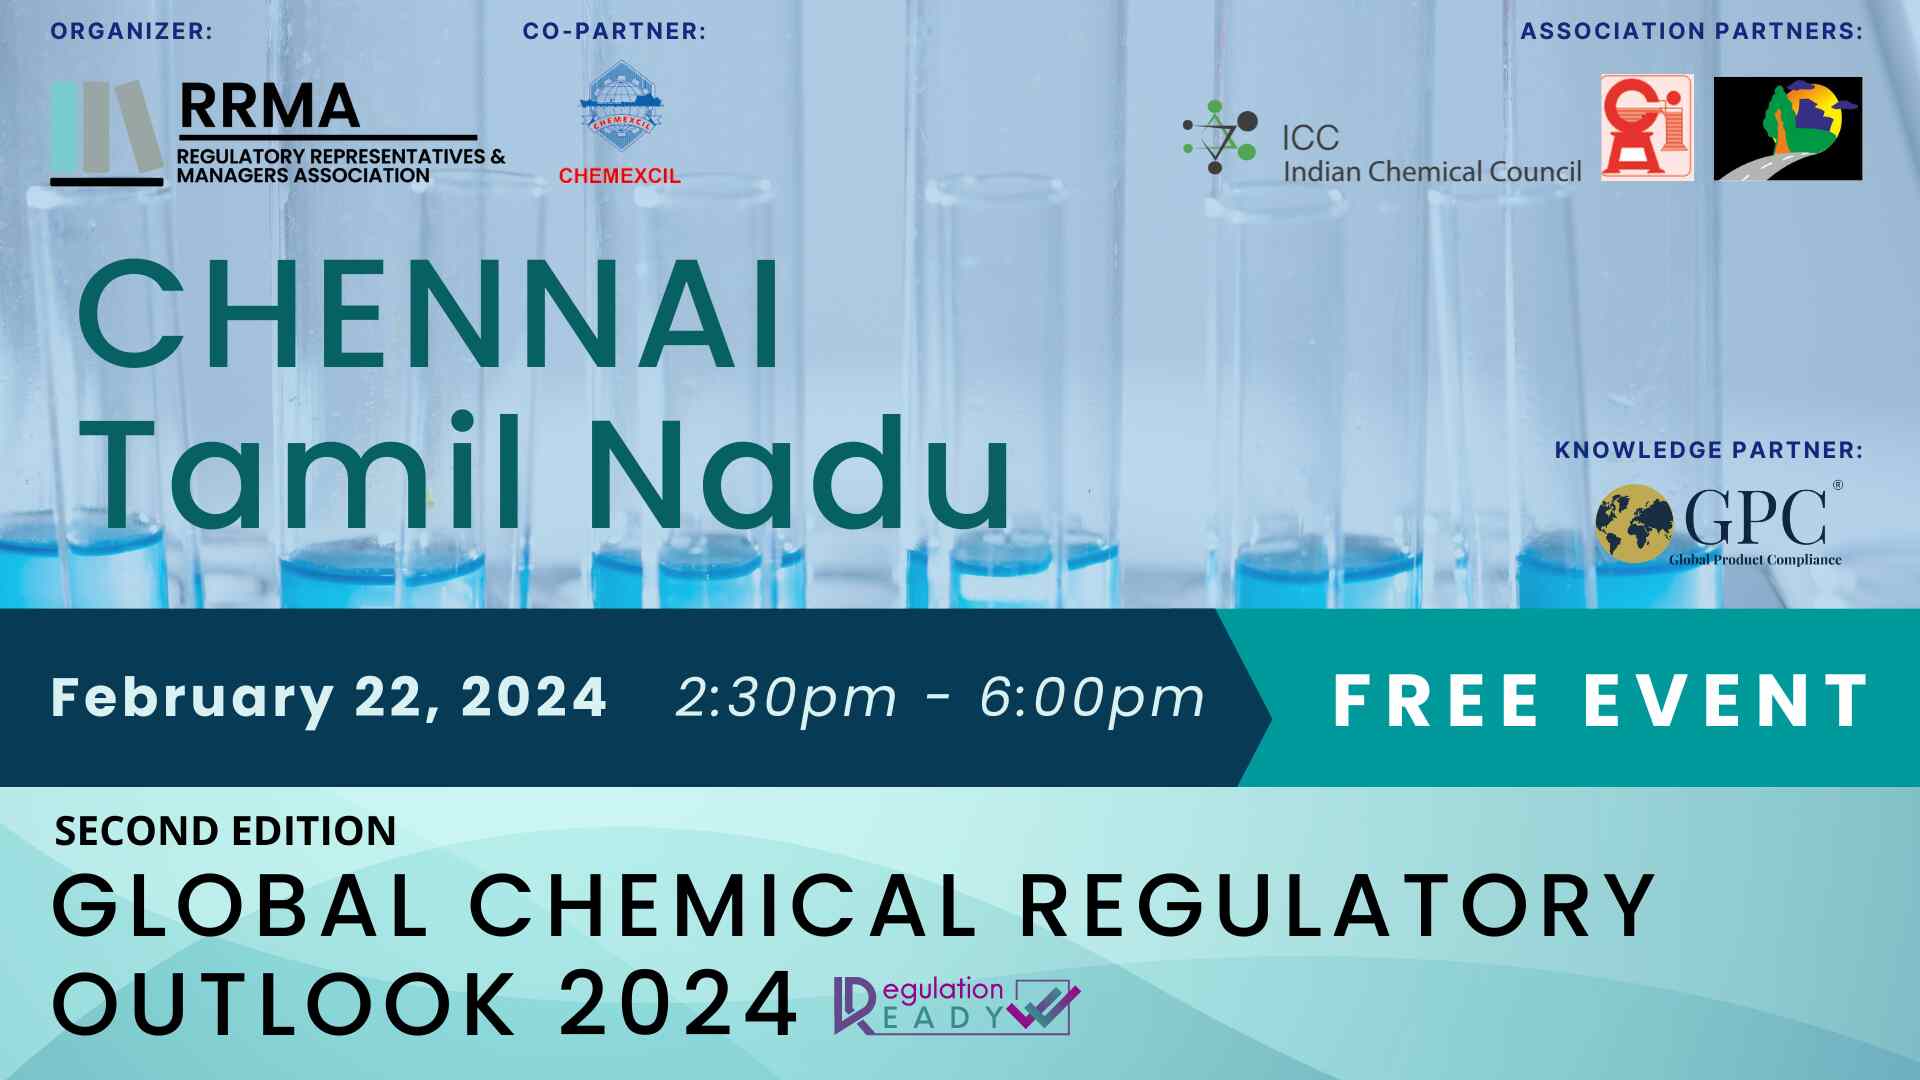 Global Chemical Regulatory Outlook 2024 in Chennai